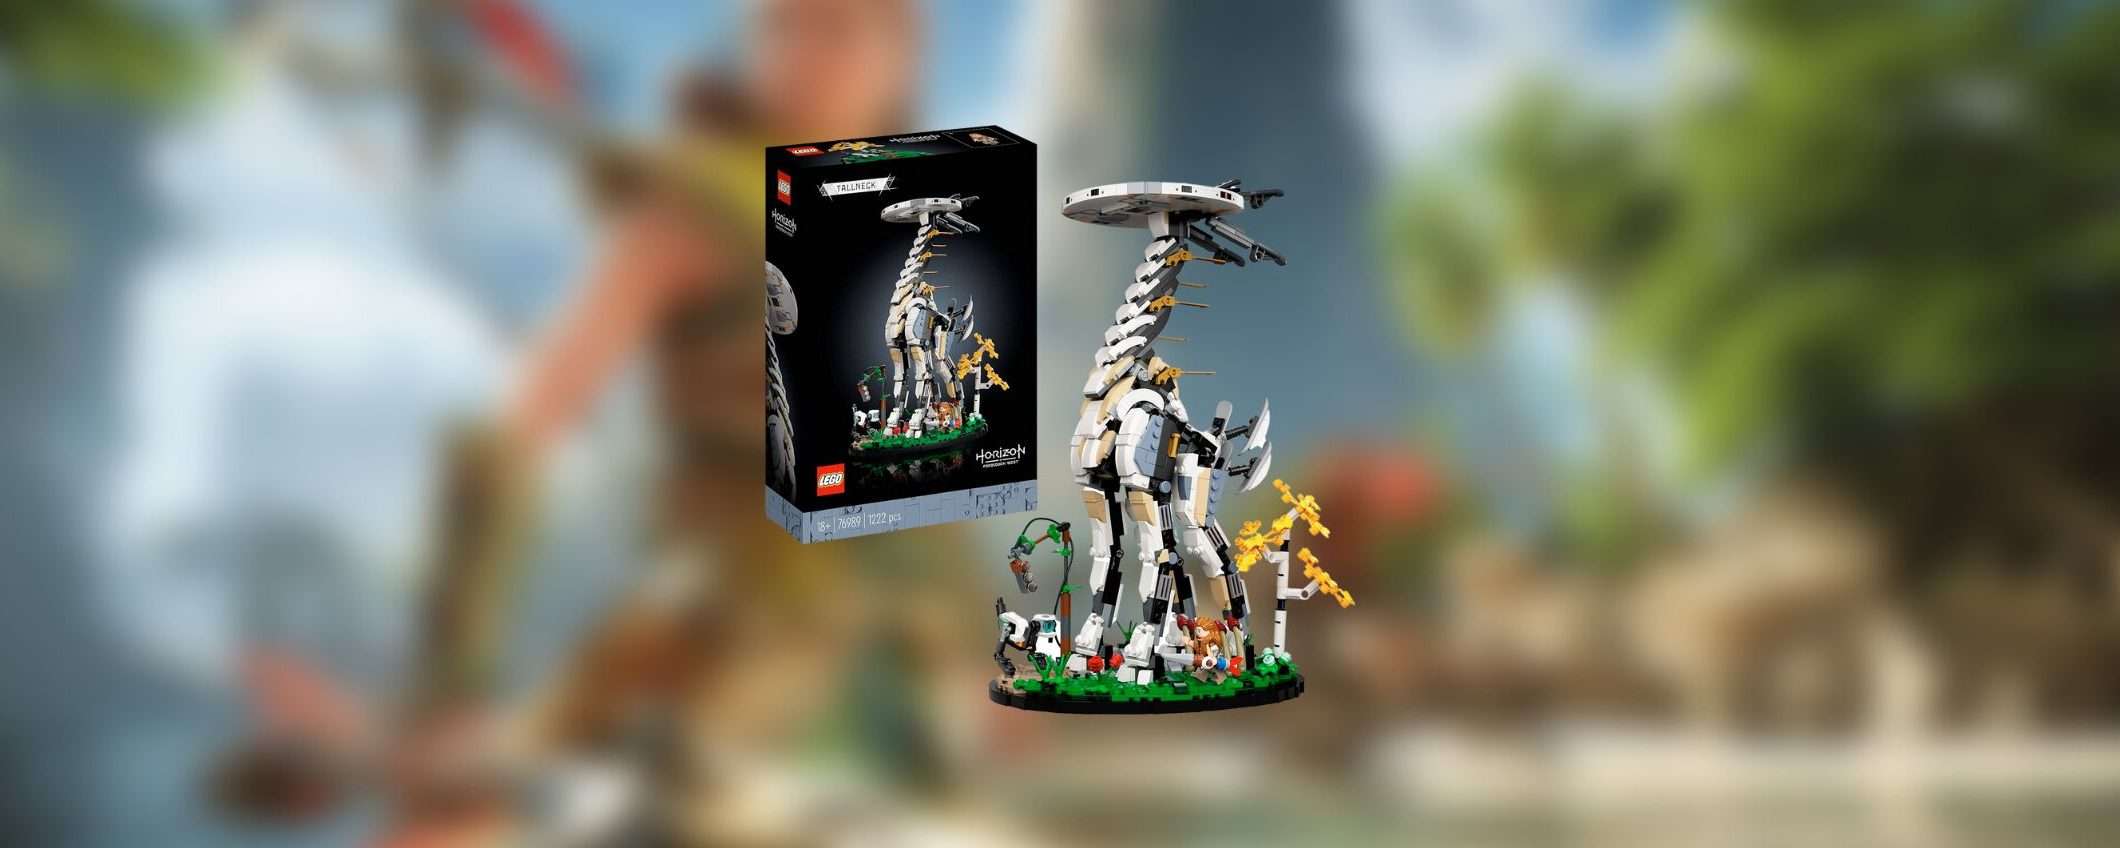 Il set LEGO Horizon Forbidden West in SCONTO RECORD su Amazon (-37%)